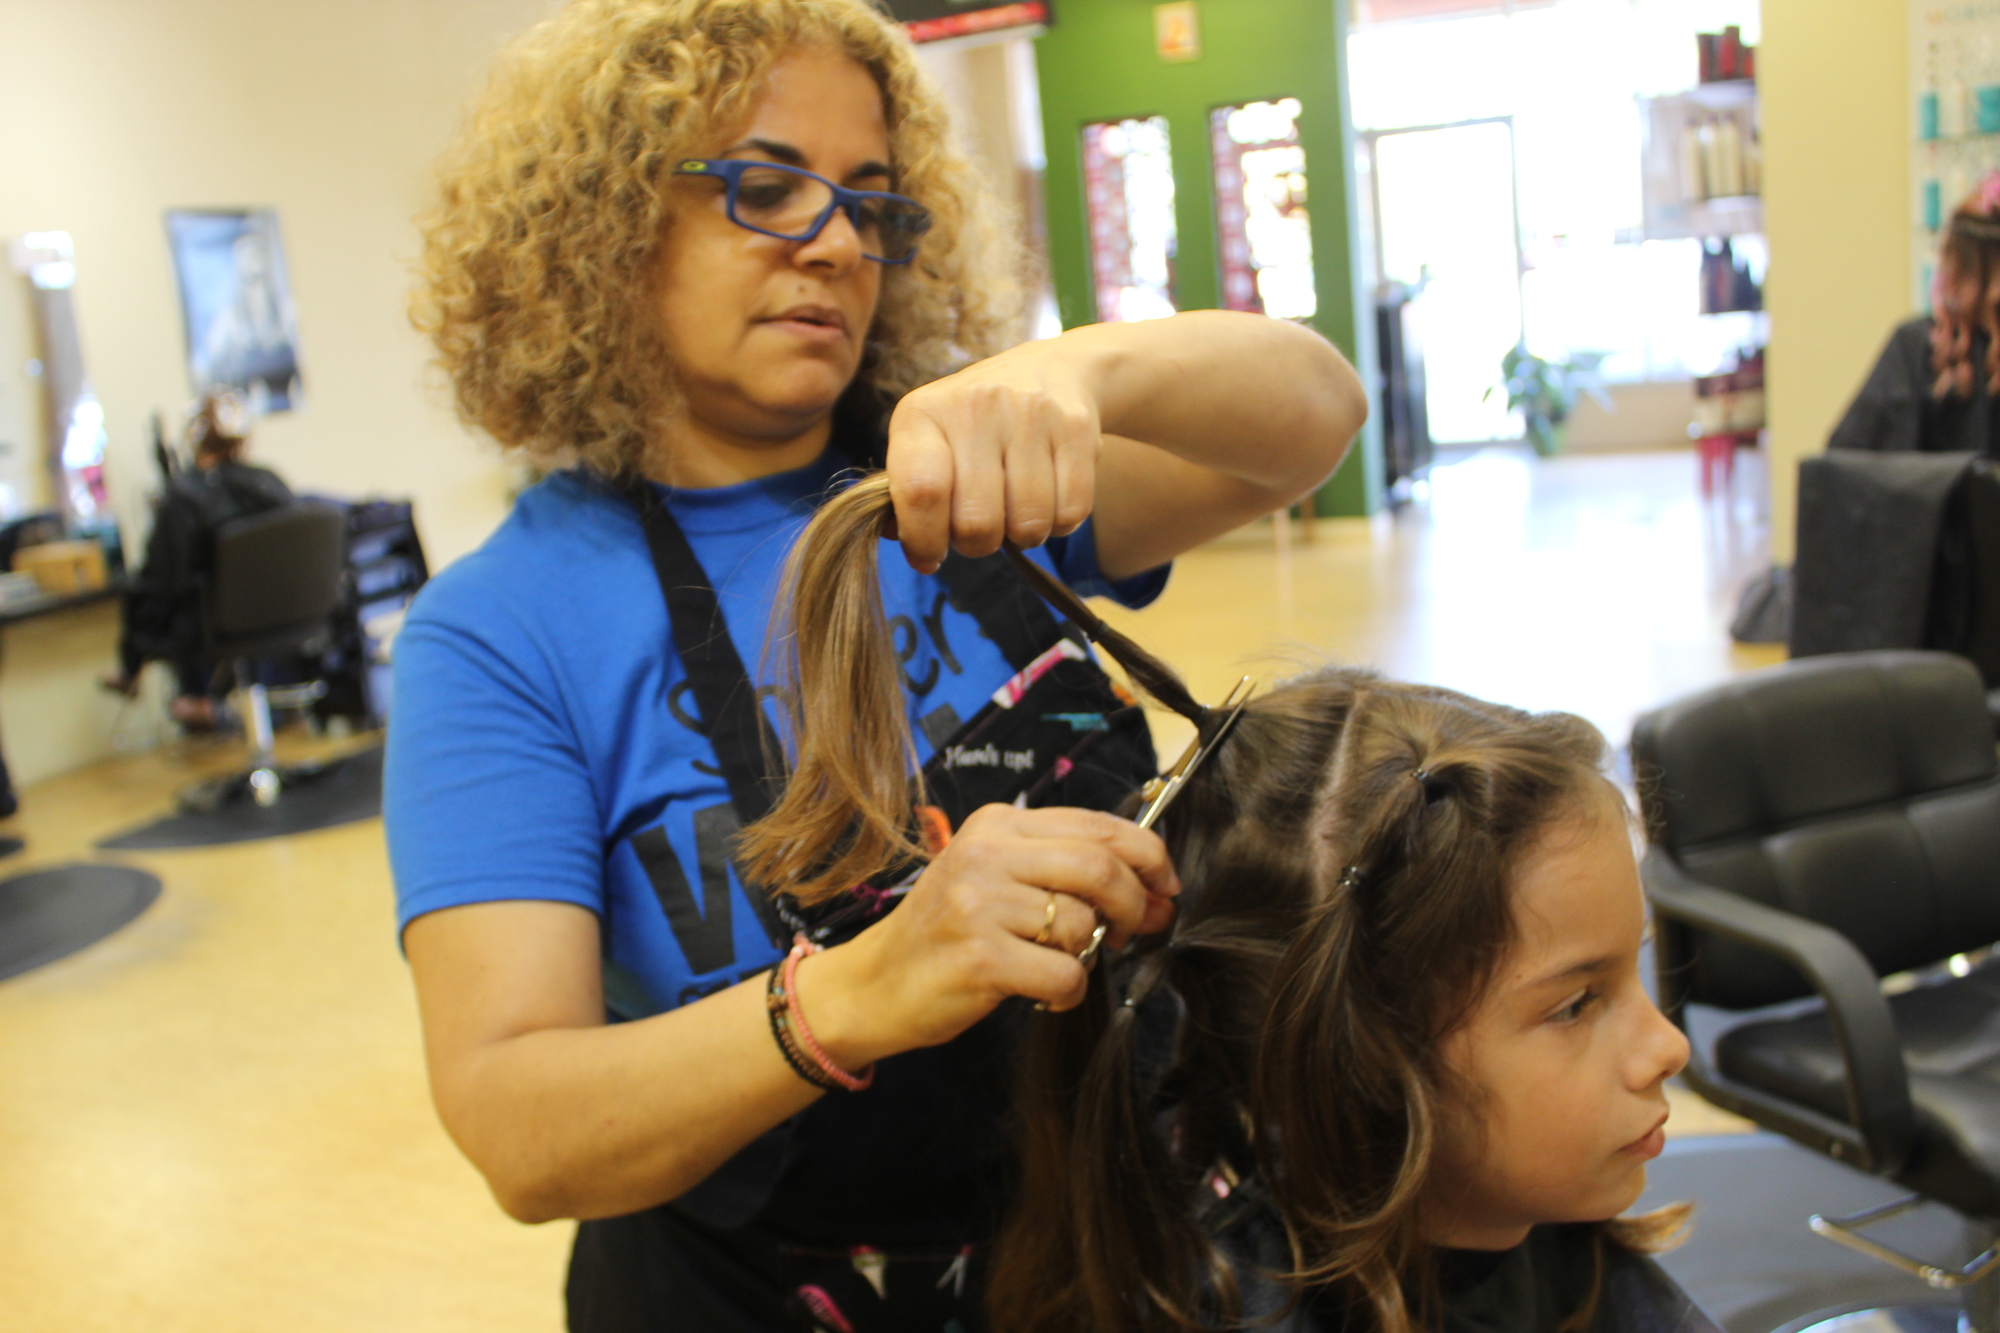 Linda Samaan snips the first ponytail on Madera's head at City Look Salon on Oct. 6. Photo by Jarleene Almenas